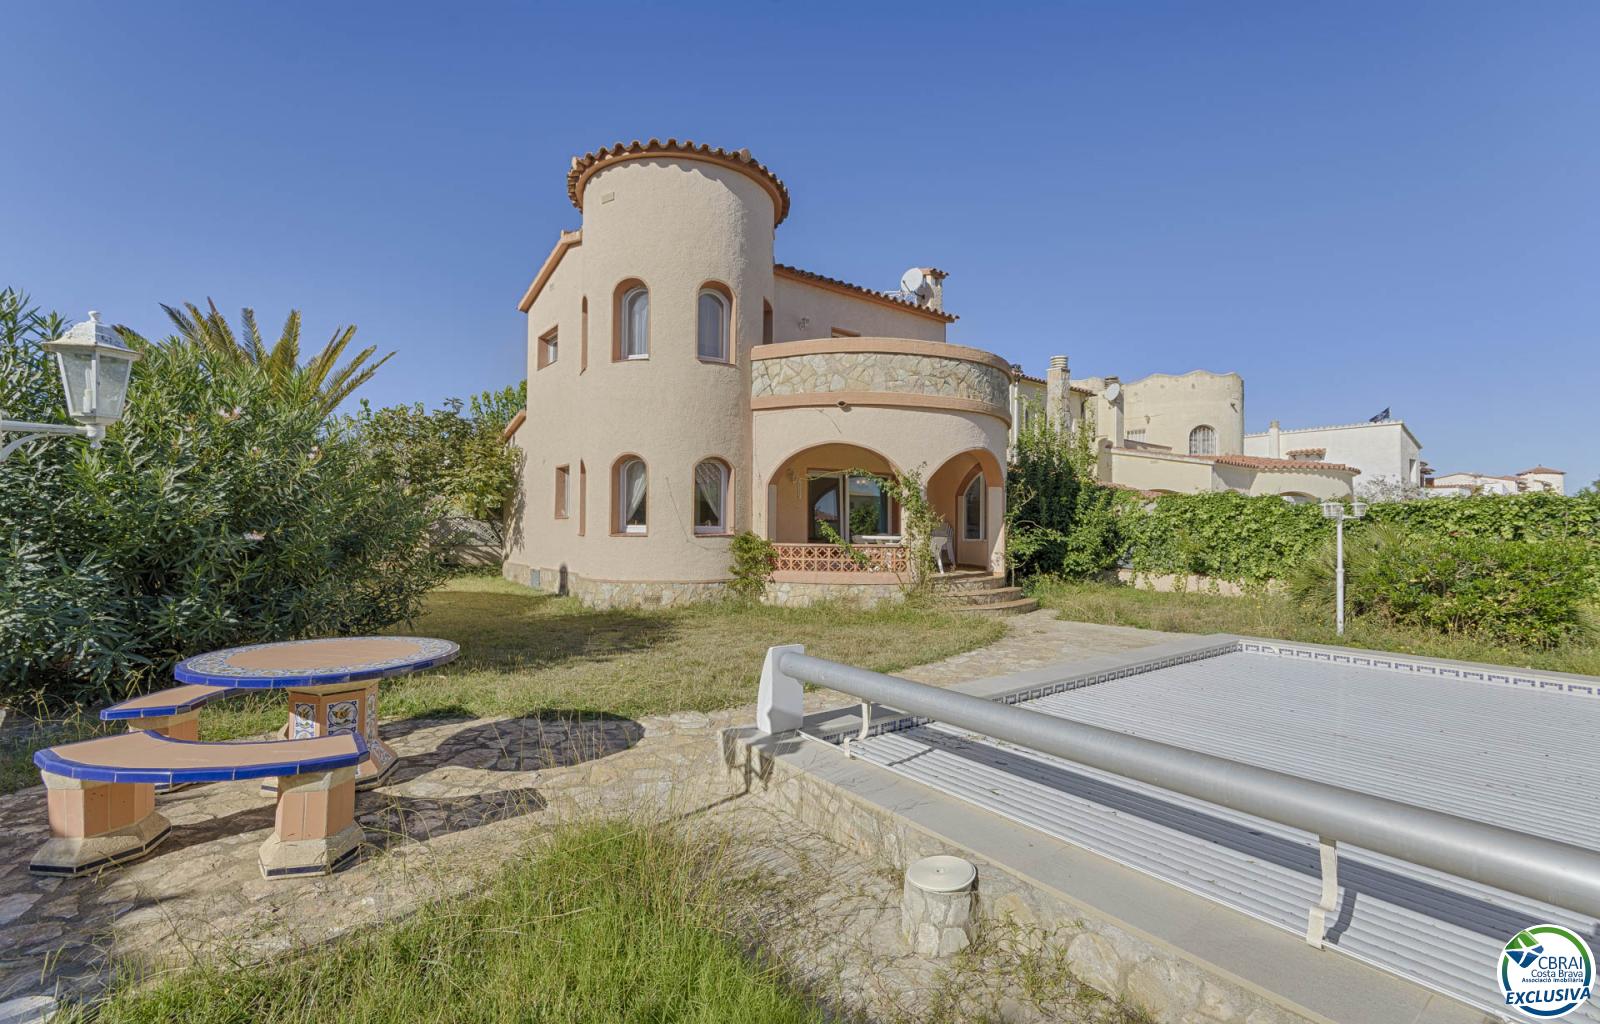 🏡 Exclusive House in Ànfora Urbanization, Sant Pere Pescador 🌅